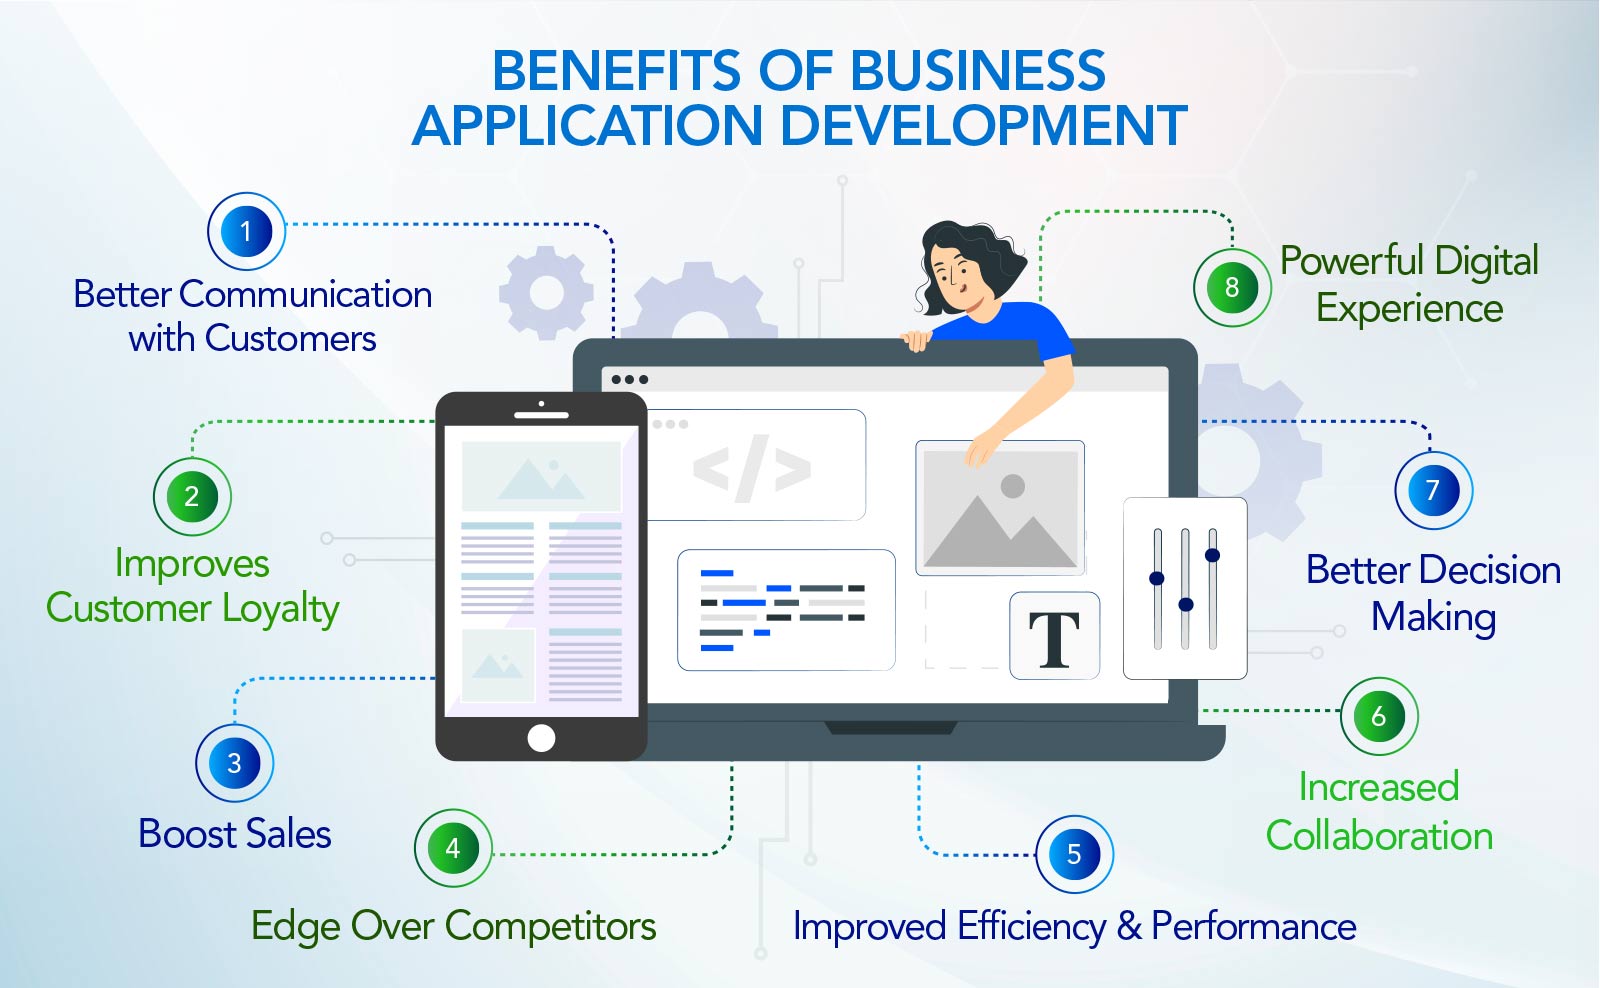 Benefits of Business Application Development